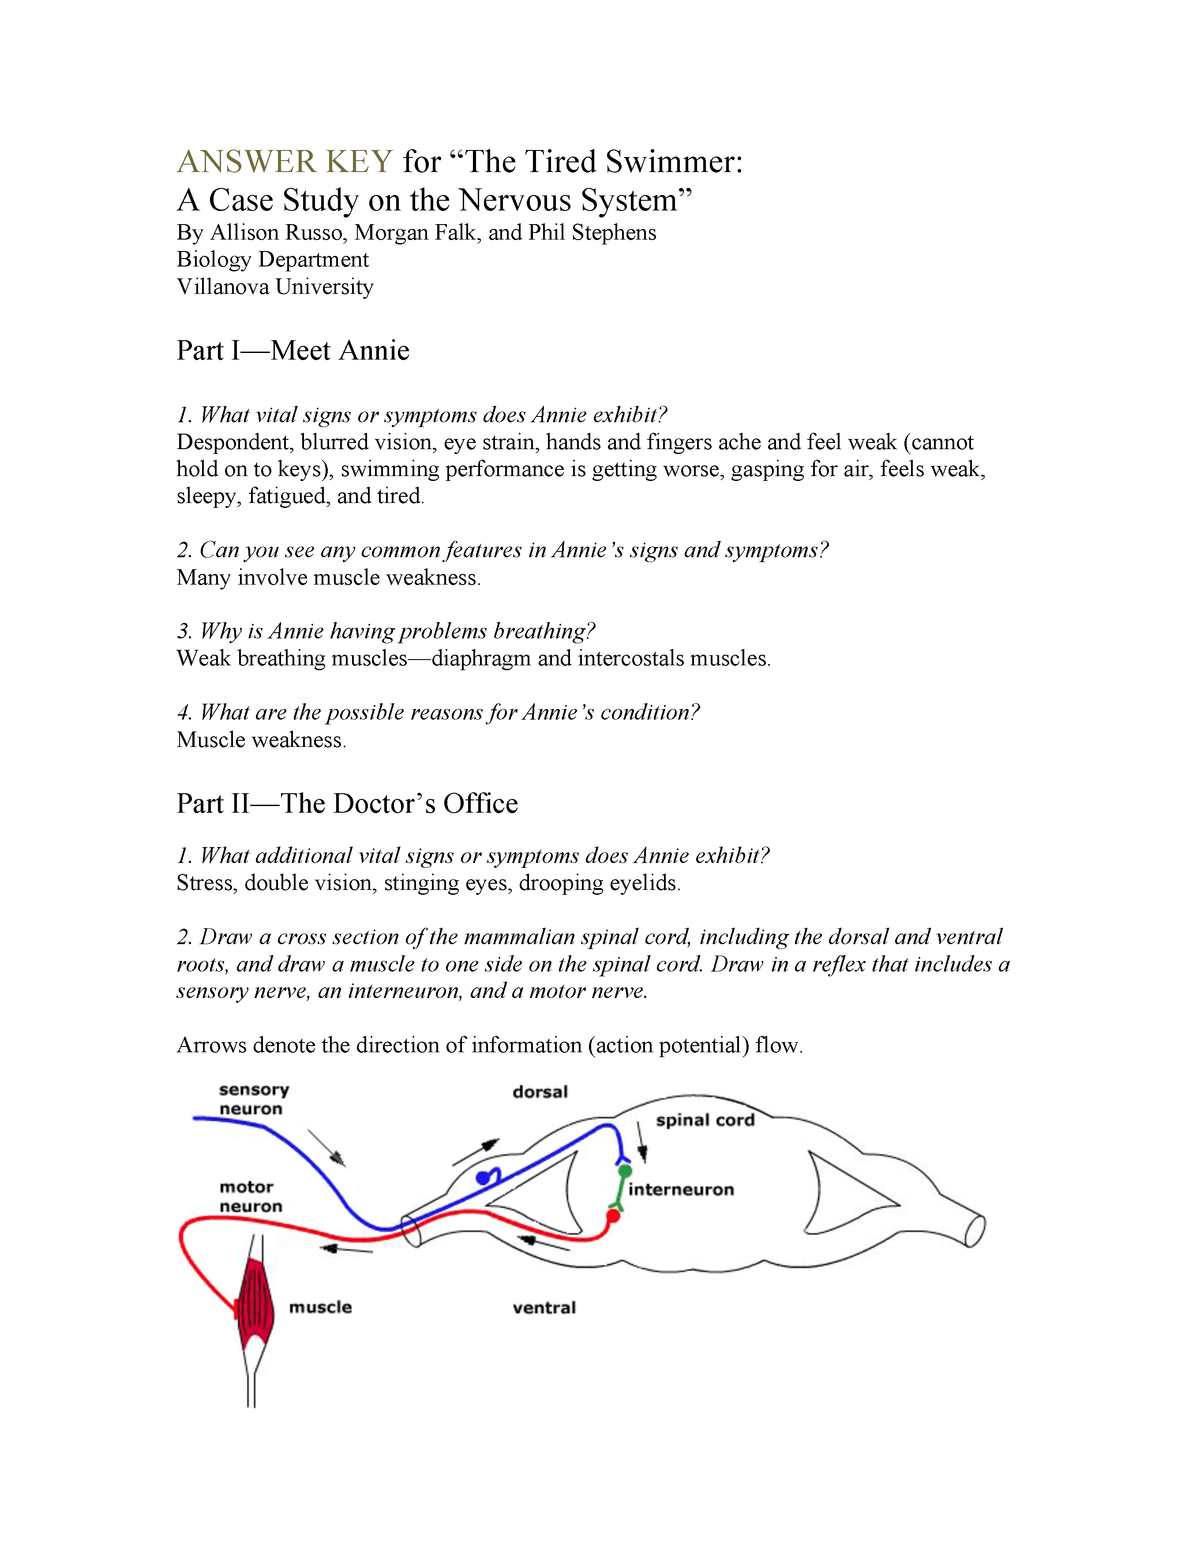 Neuromuscular Junction Flow Chart